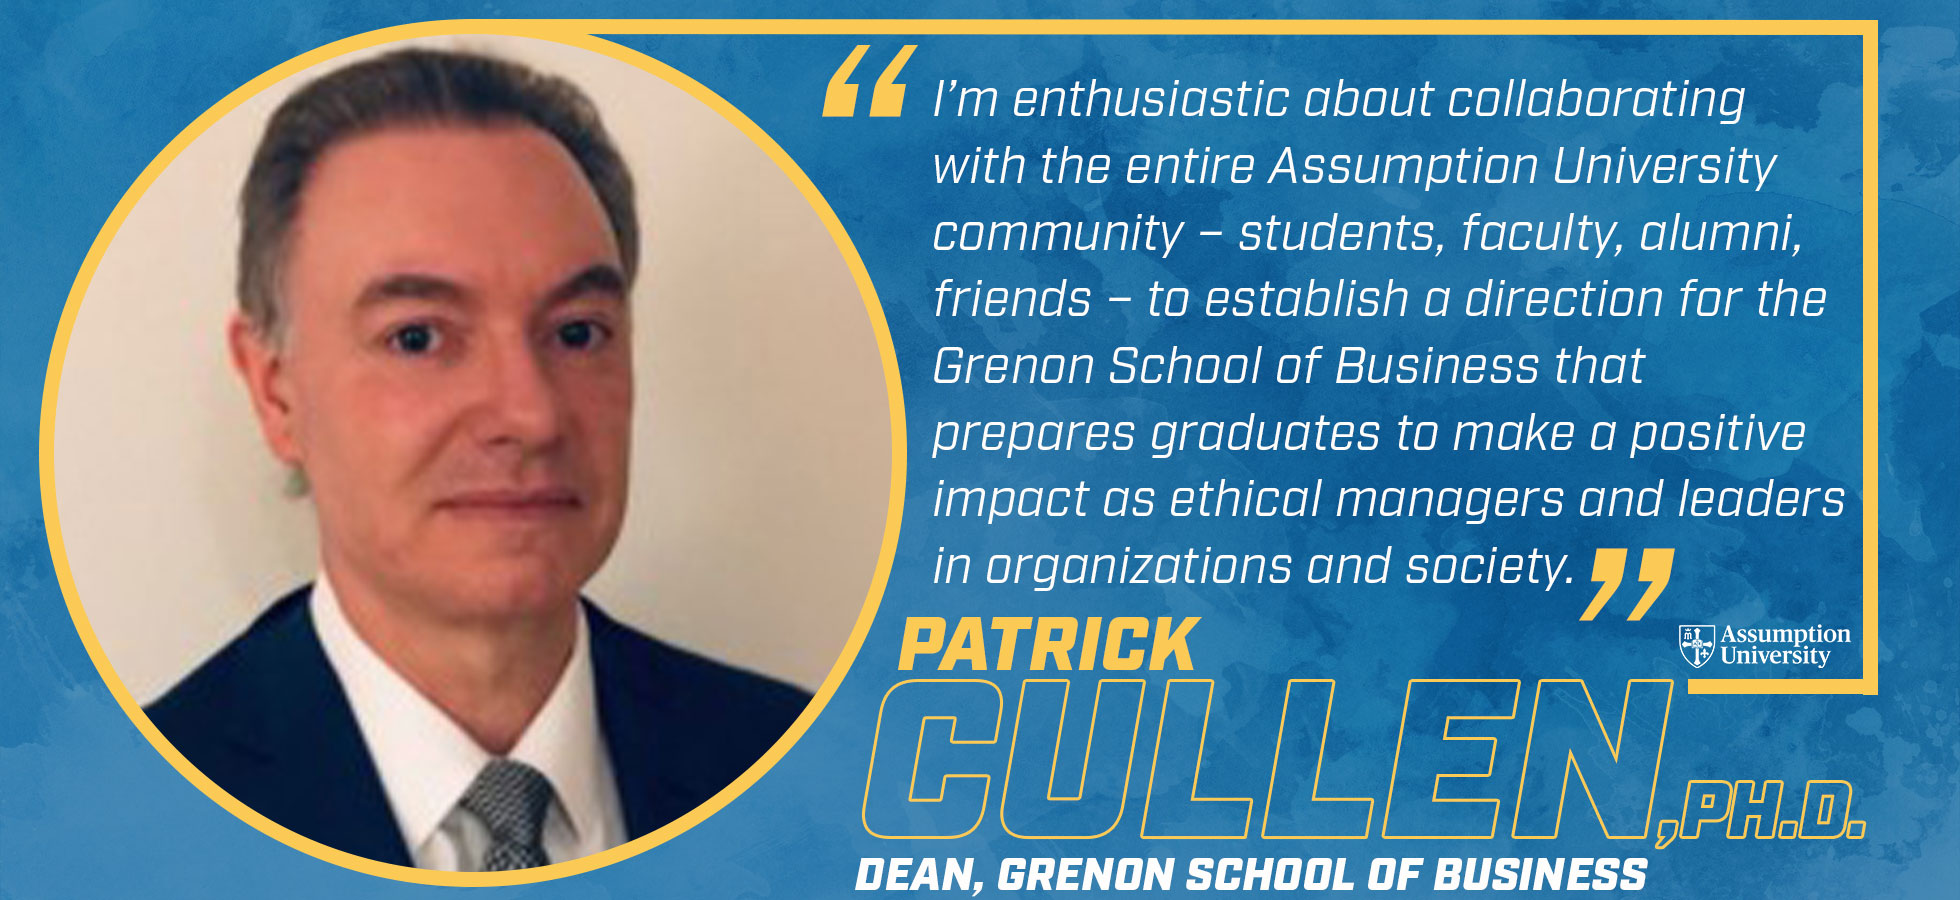 Assumption University Announces Patrick Cullen, Ph.D.  As New Dean of The Grenon School of Business